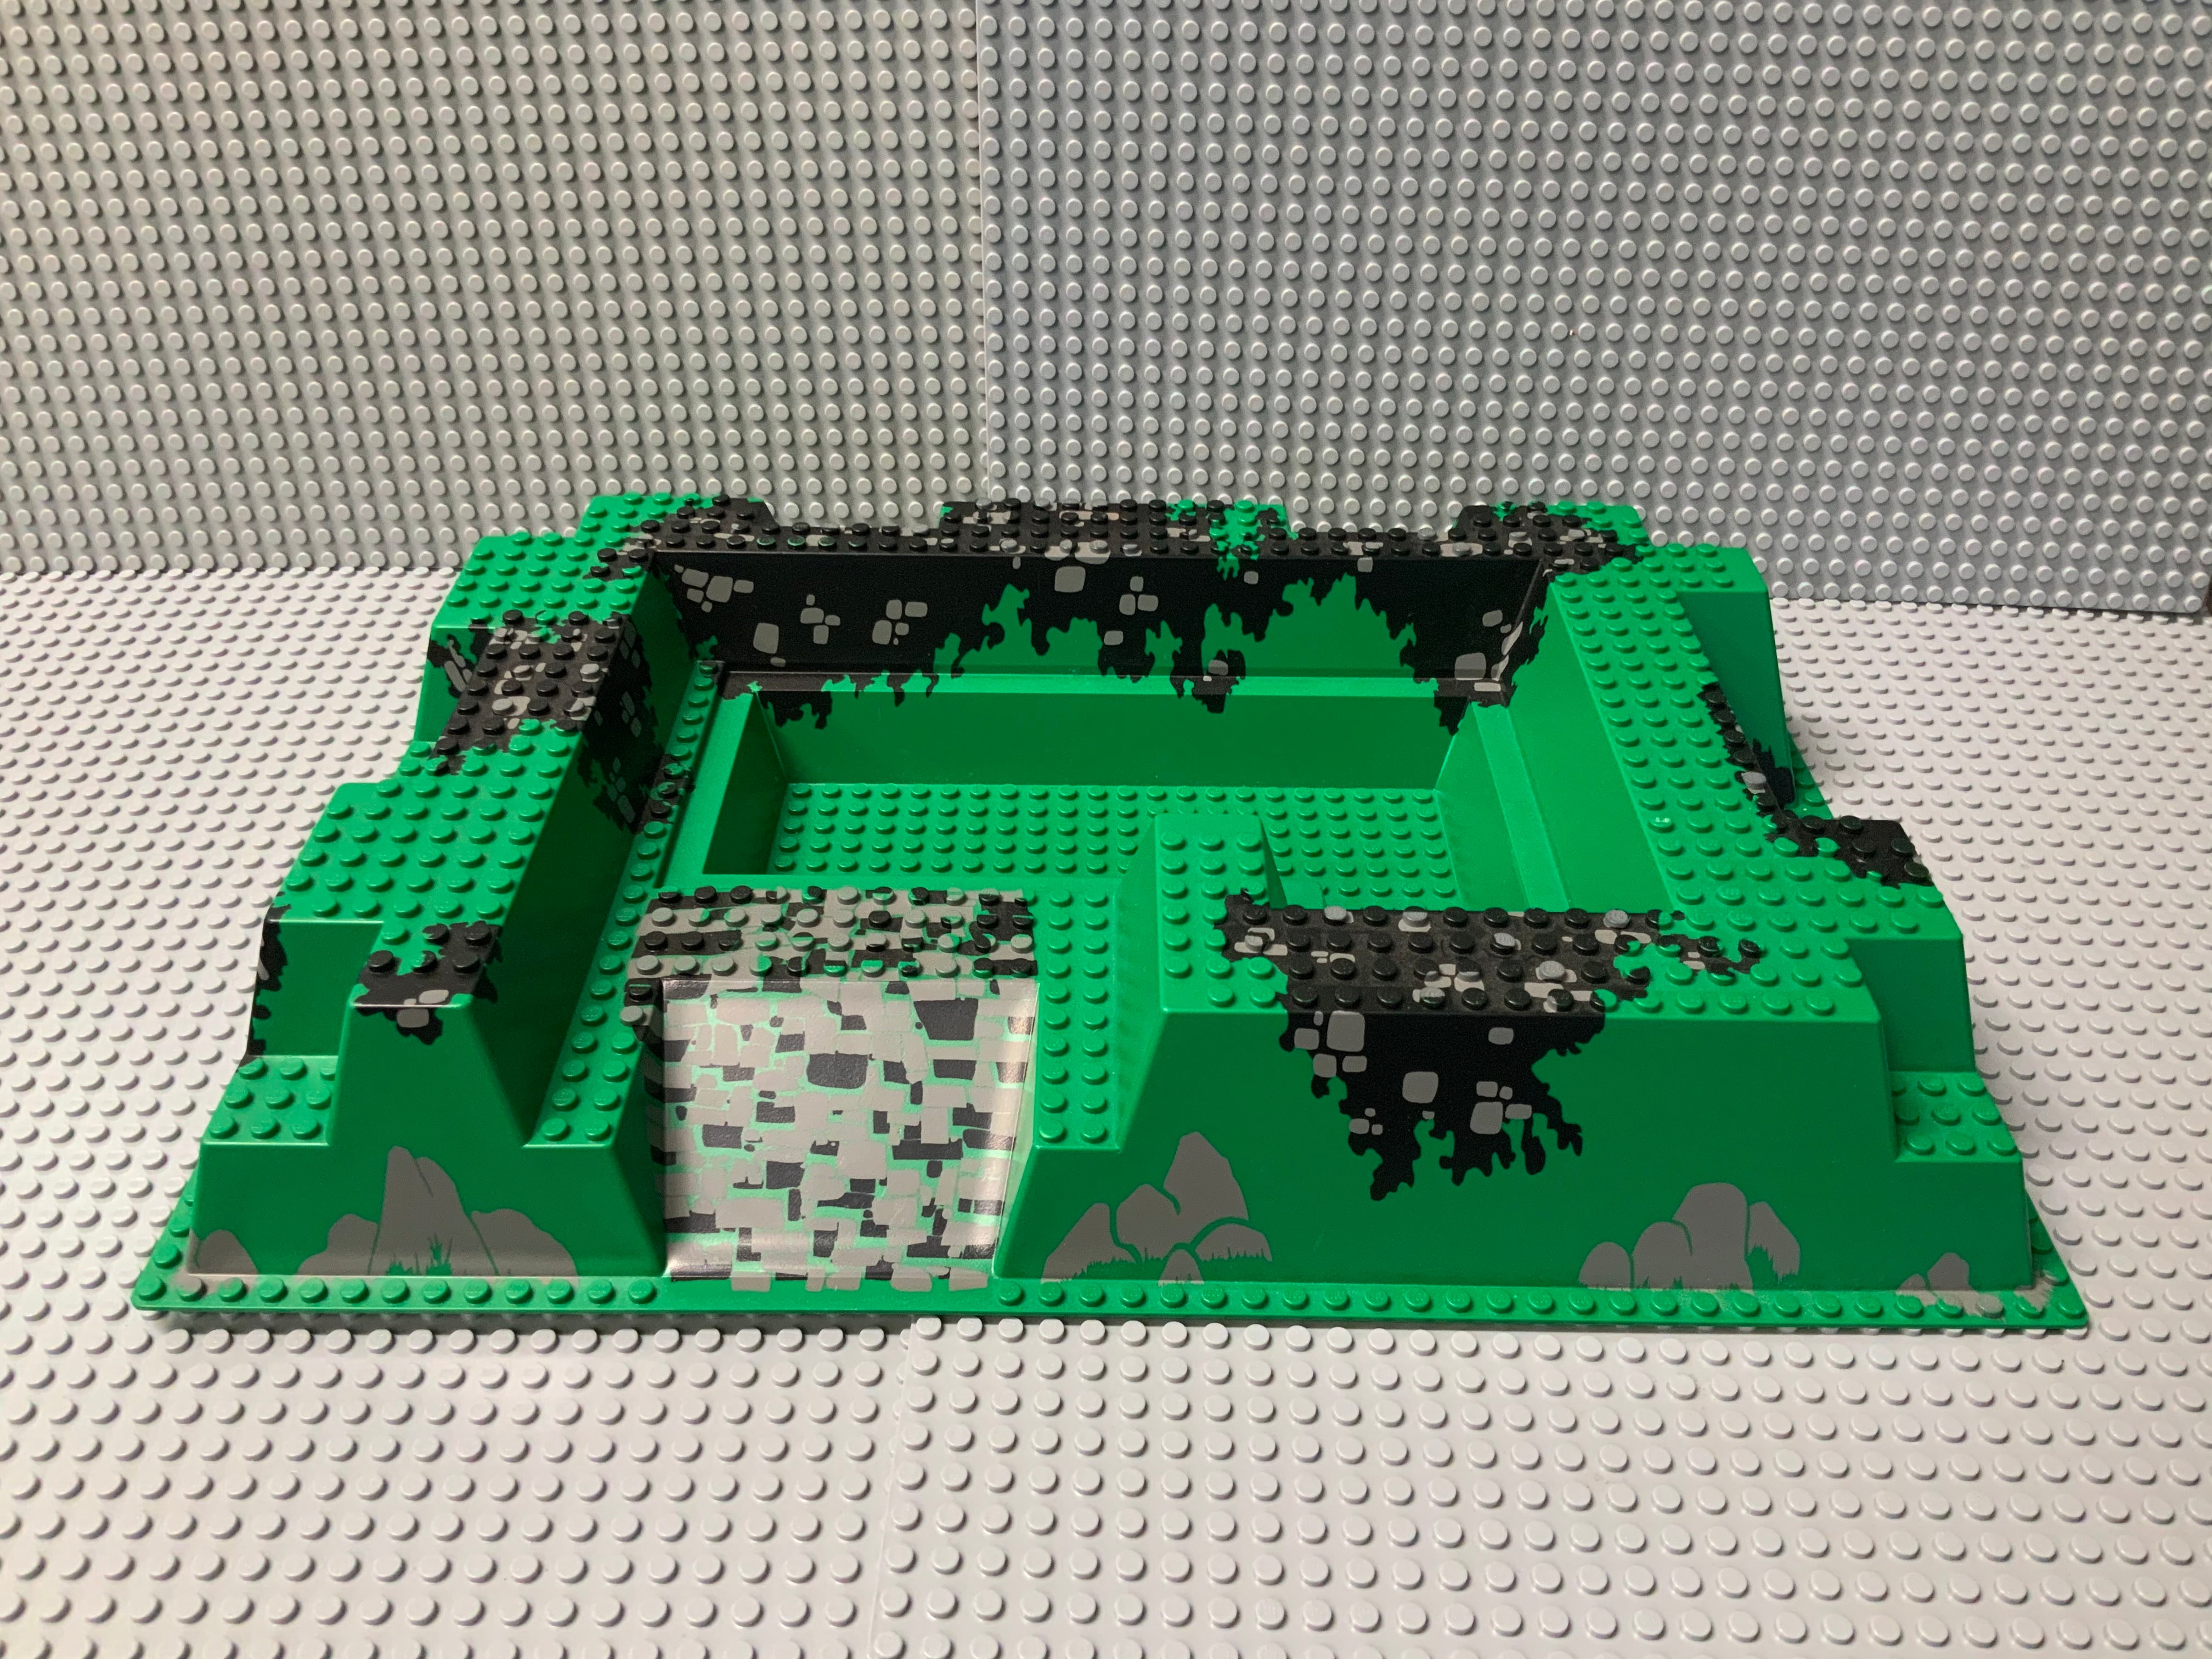 Lego Tray 10 x 20 in Green Baseplate, Handmande, New 11.6 x 21.6 x 1.6 in